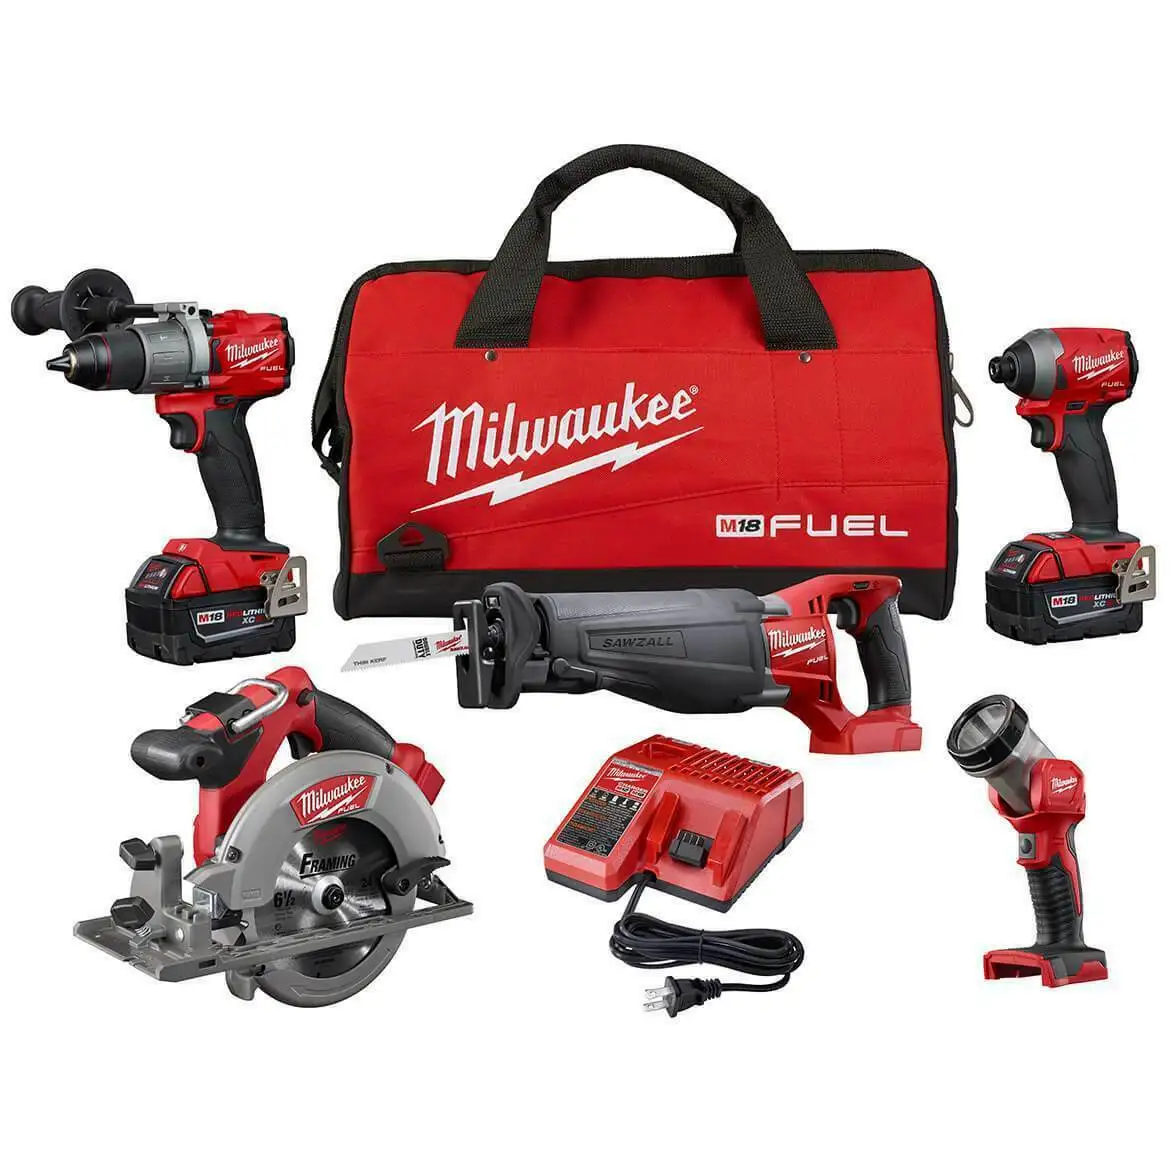 Milwaukees FUEL M18 2997-25 18-Volt 10-Tool Drill/Driver/Saws/Light Combo Kit